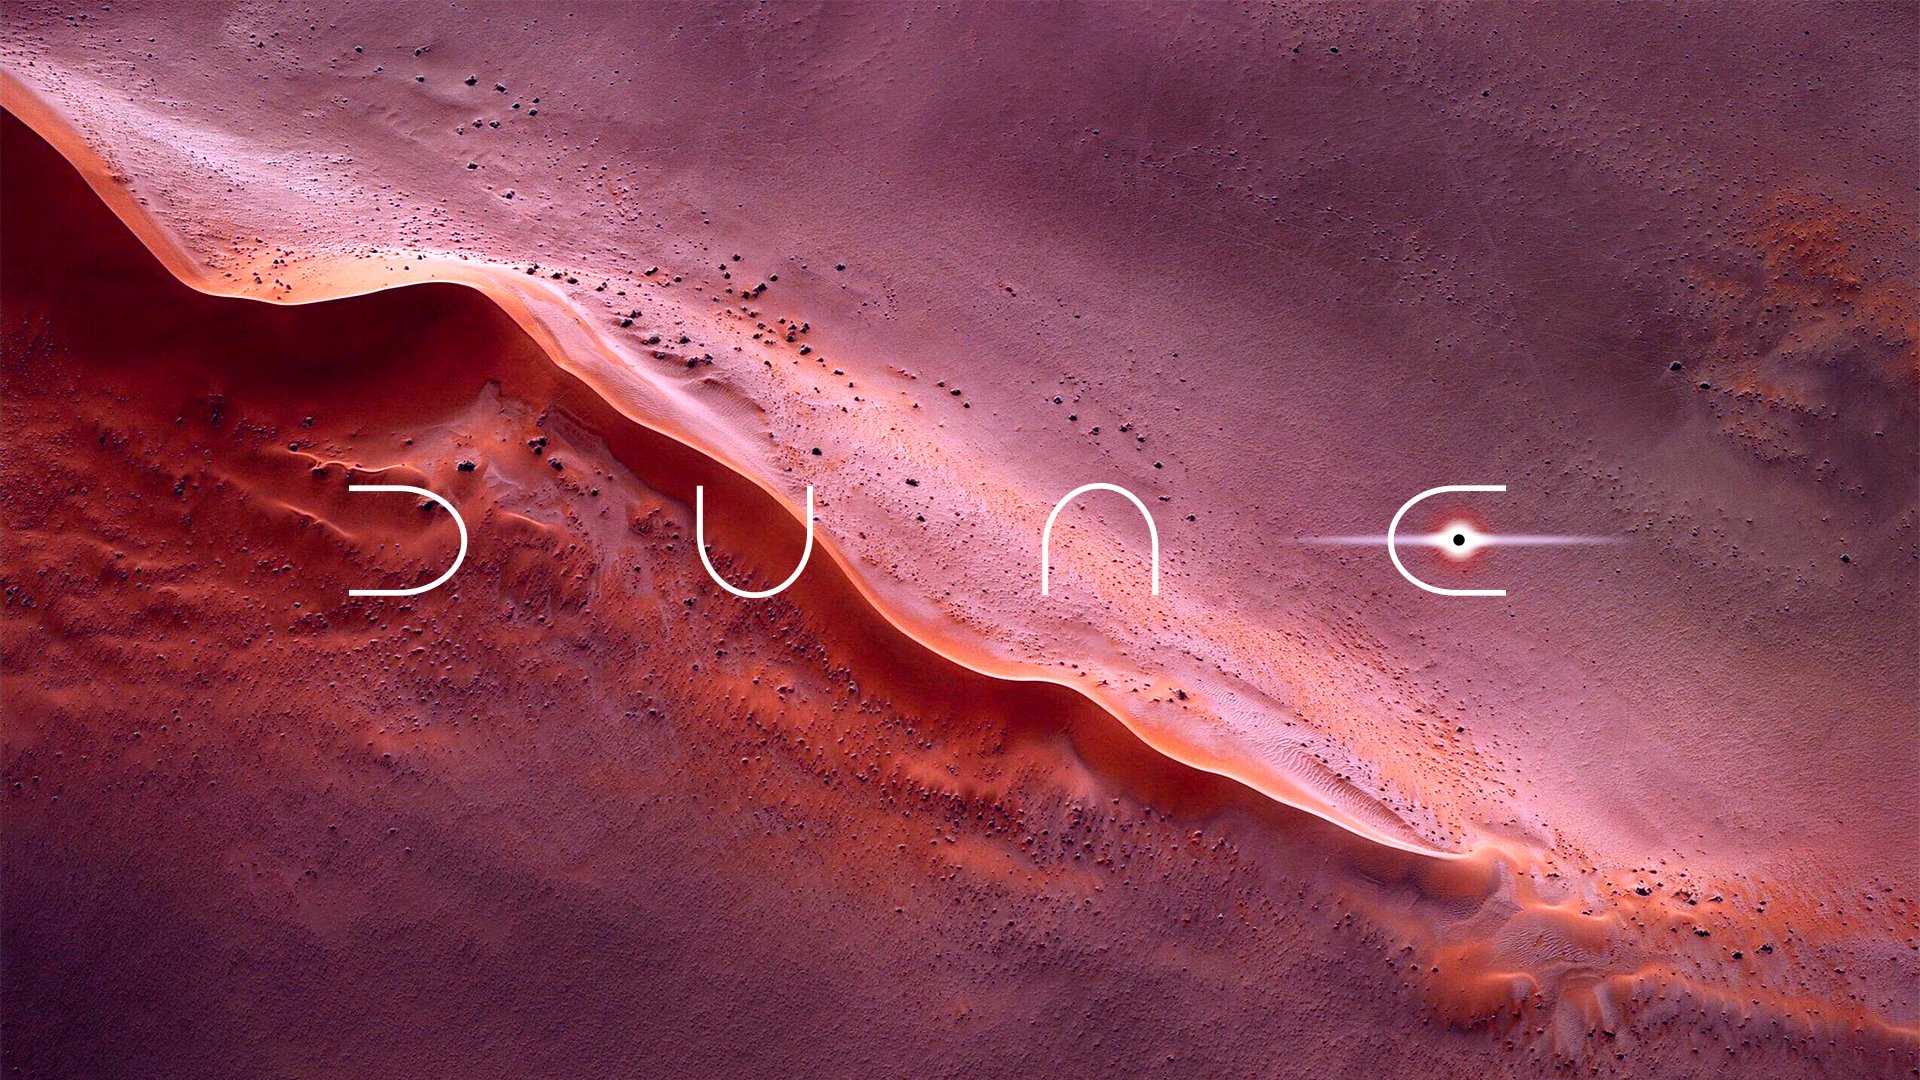 Dune HD Wallpaper Background Image